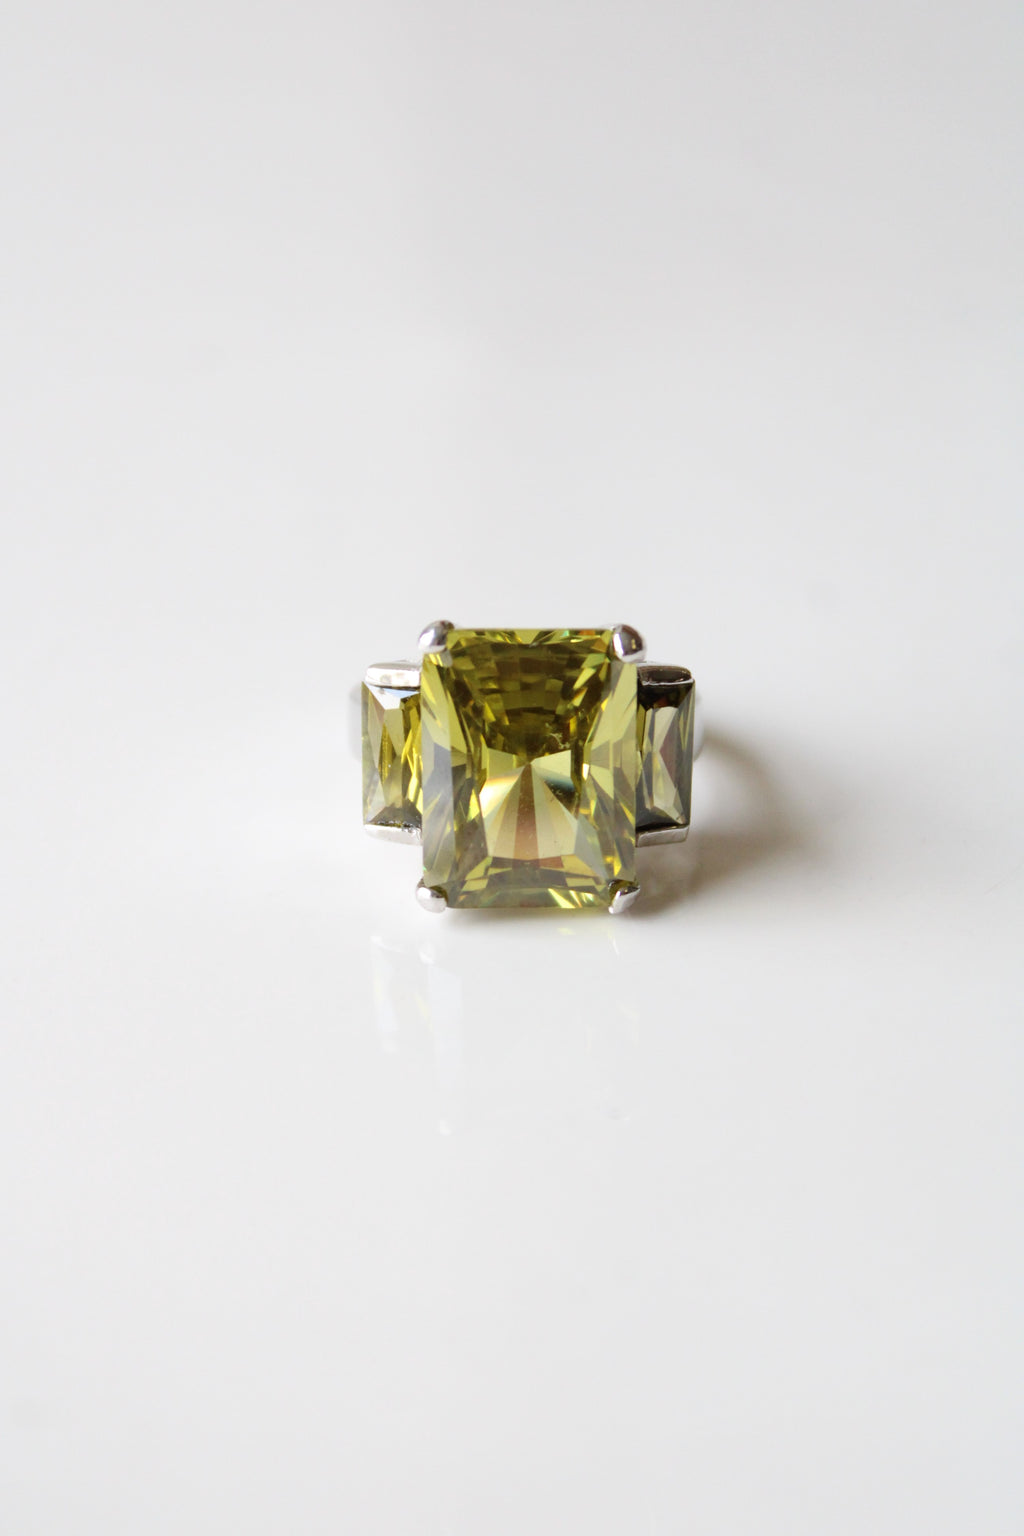 Lemon Quartz Green Stone Sterling Silver Ring | Size 7